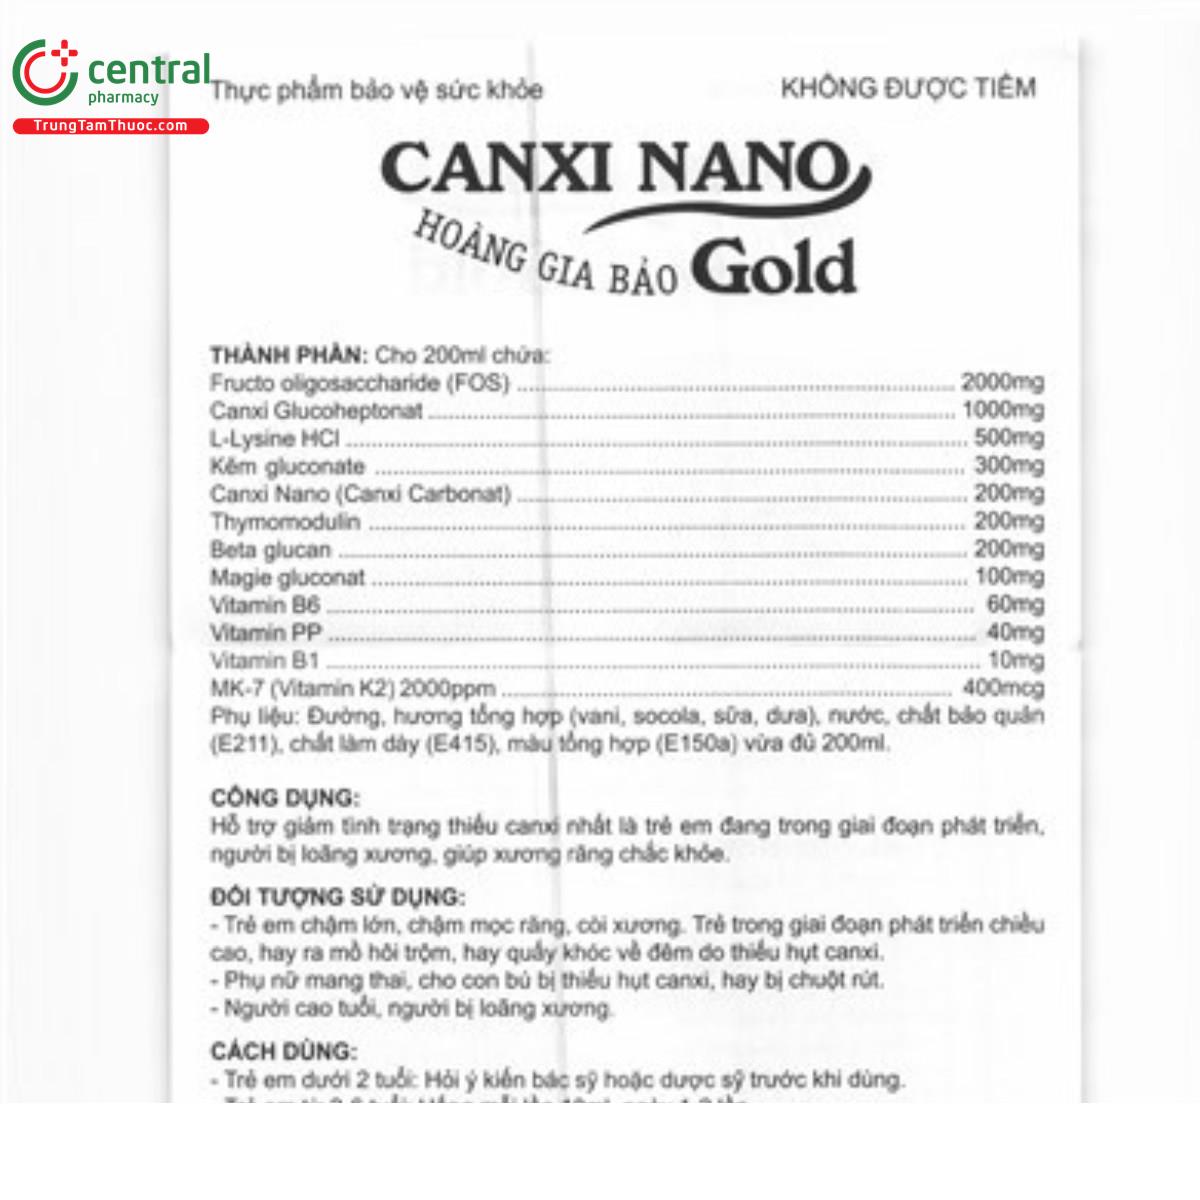 canxi nano hoang gia bao gold 8 E1658